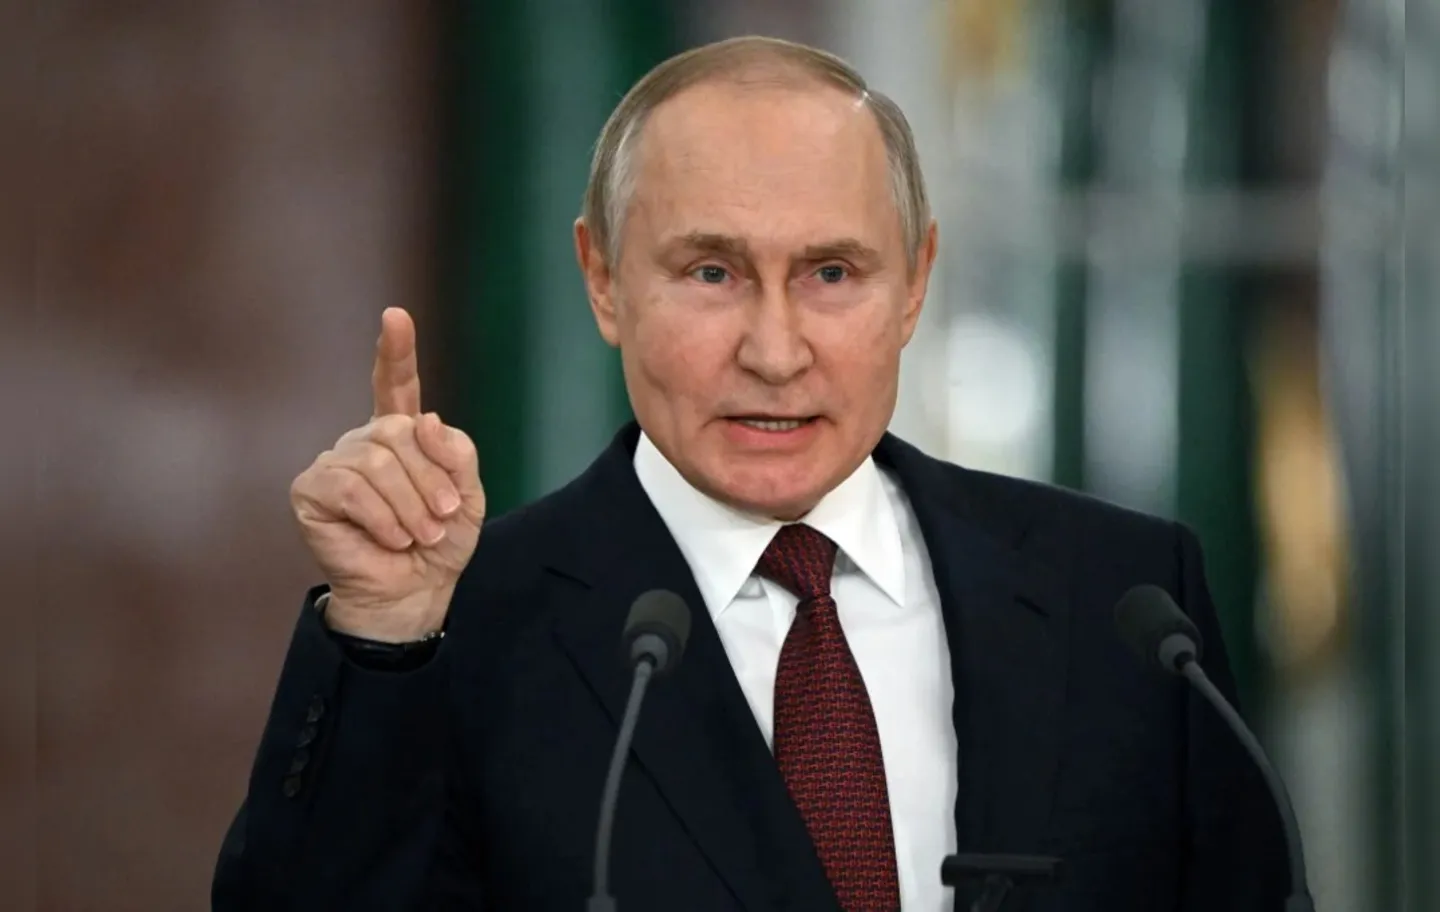 Vladimir Putin é presidente da Rússia desde 2012